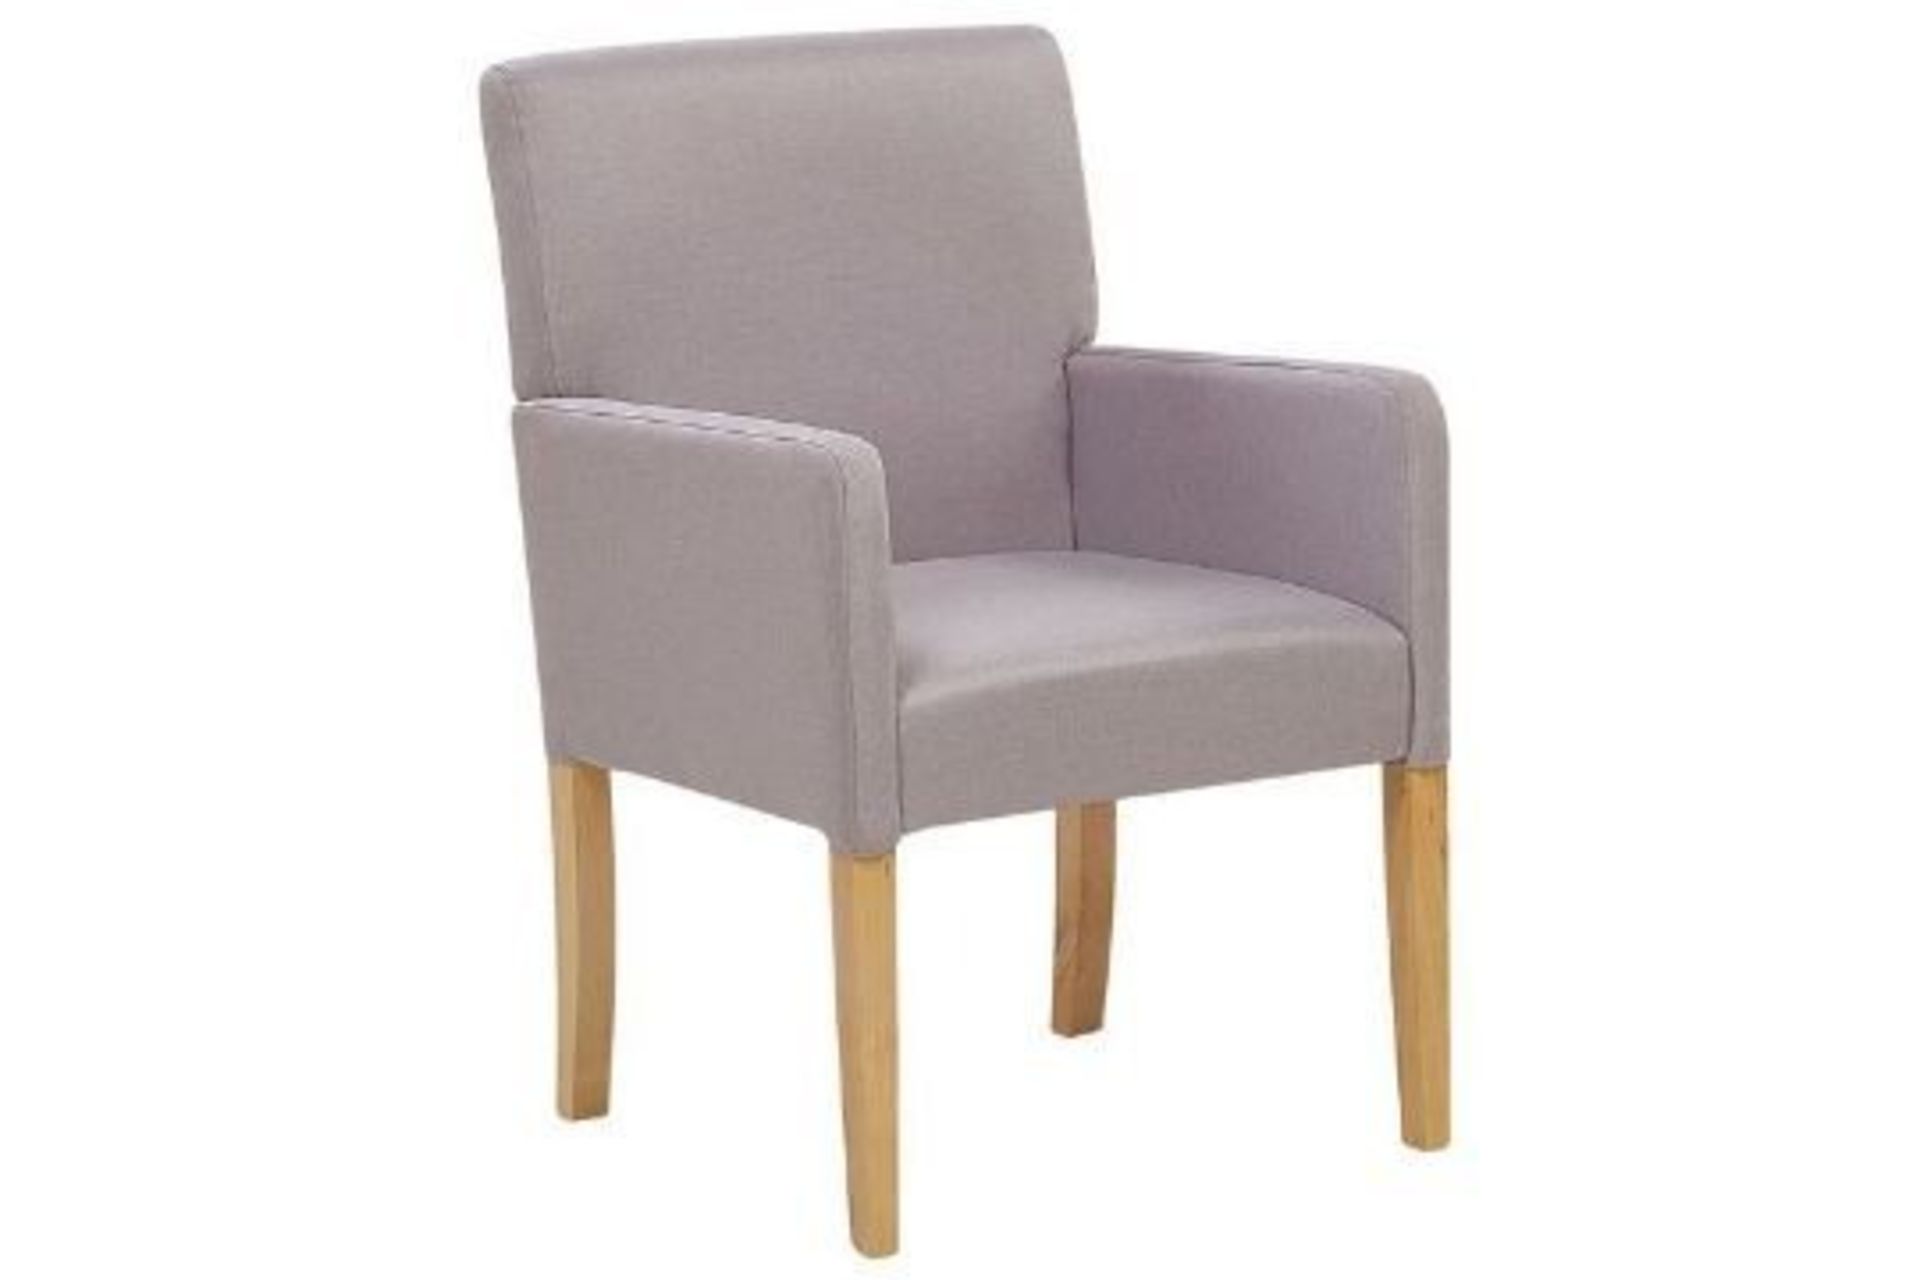 Rockefeller Fabric Dining Chair Light Grey. - ER23. RRP £189.99